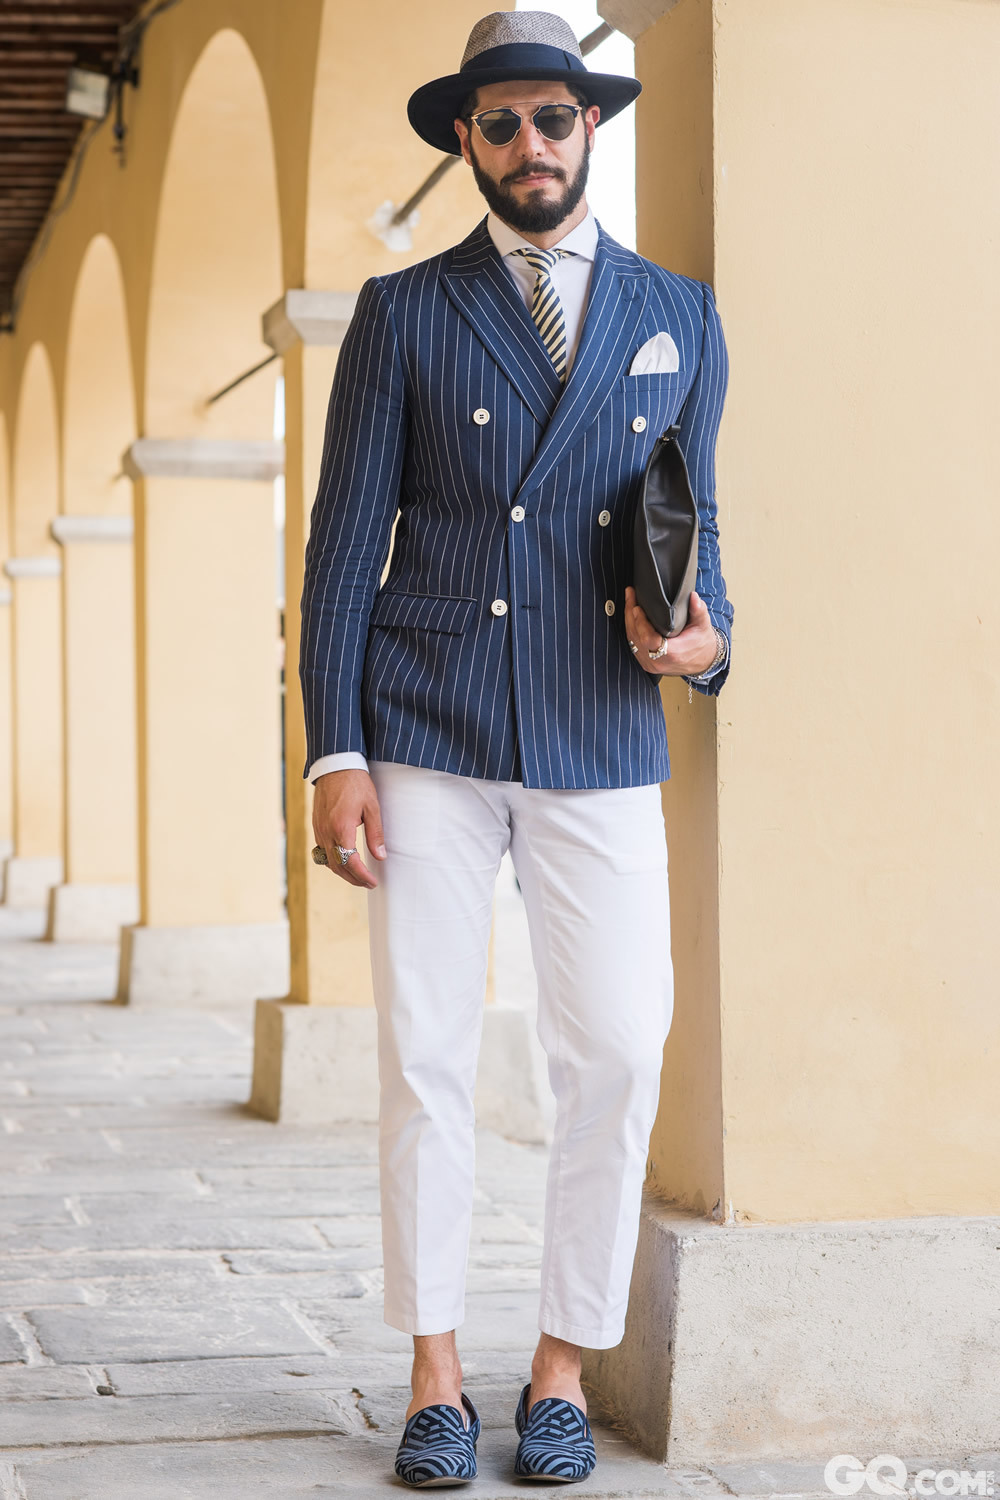 Kadu
Hat and pocket square: Zara
Sunglasses: Dior
Suit and shirt: Tommy Hilfiger
Tie: Gant Rugger
Portfolio: Mont Blanc
Shoes: Westwood

Inspiration: Navy and stripes! Nobody wears stripes these days.
（海军蓝和条纹，这些天都没人穿条纹。）